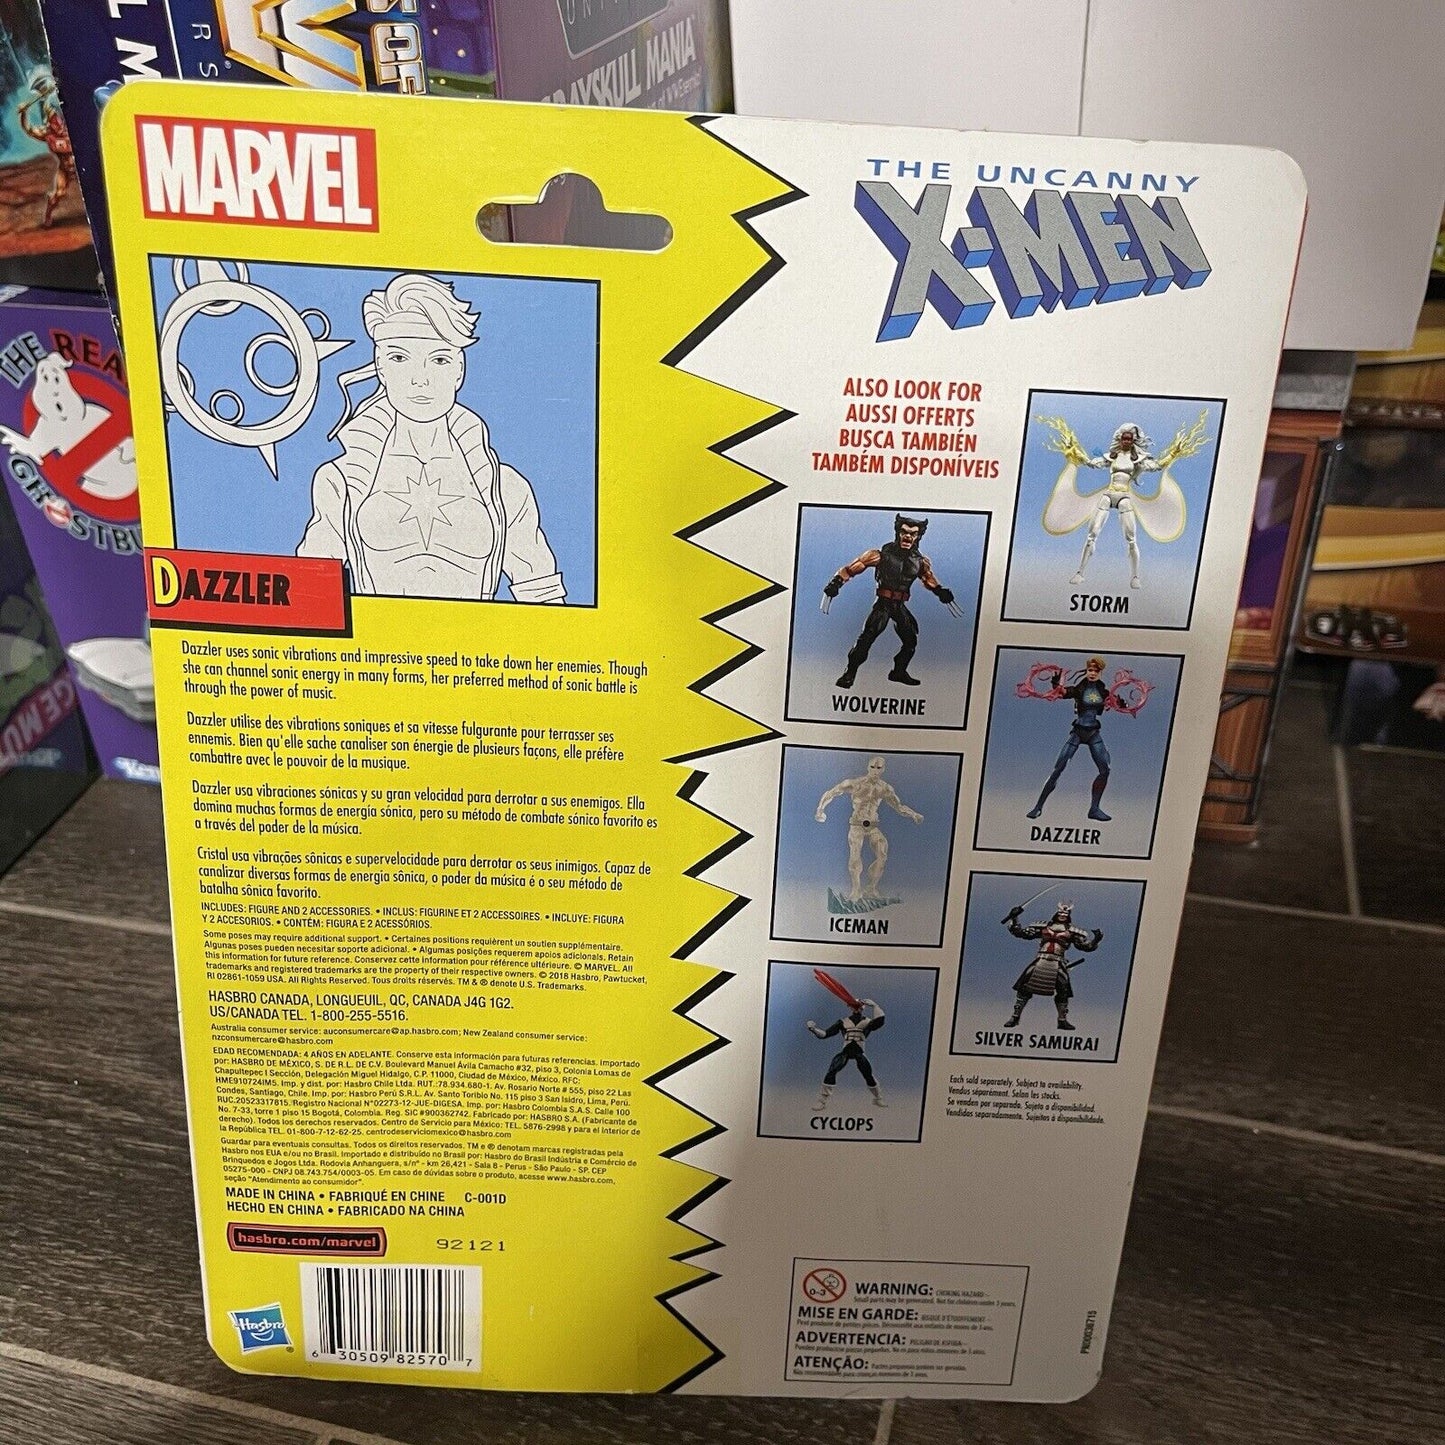 Dazzler 6" Action Figure, Marvel 80 Years - The Uncanny X-Men - Hasbro - NEW